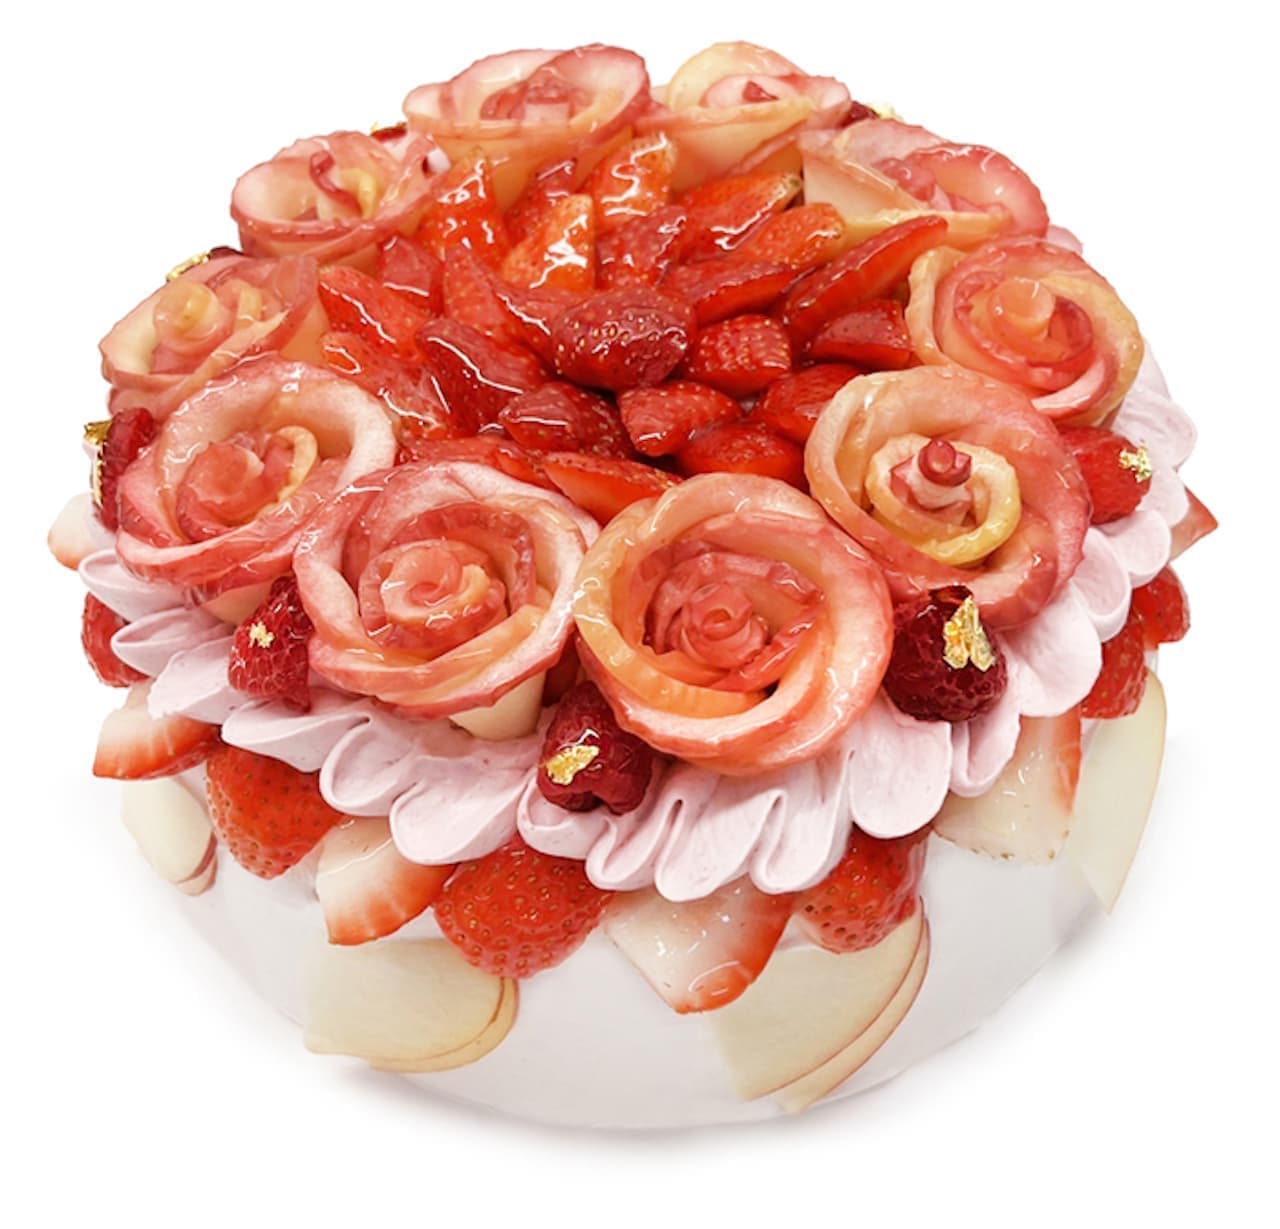 Cafe COMSA "Apple Rose and Strawberry Shortcake".